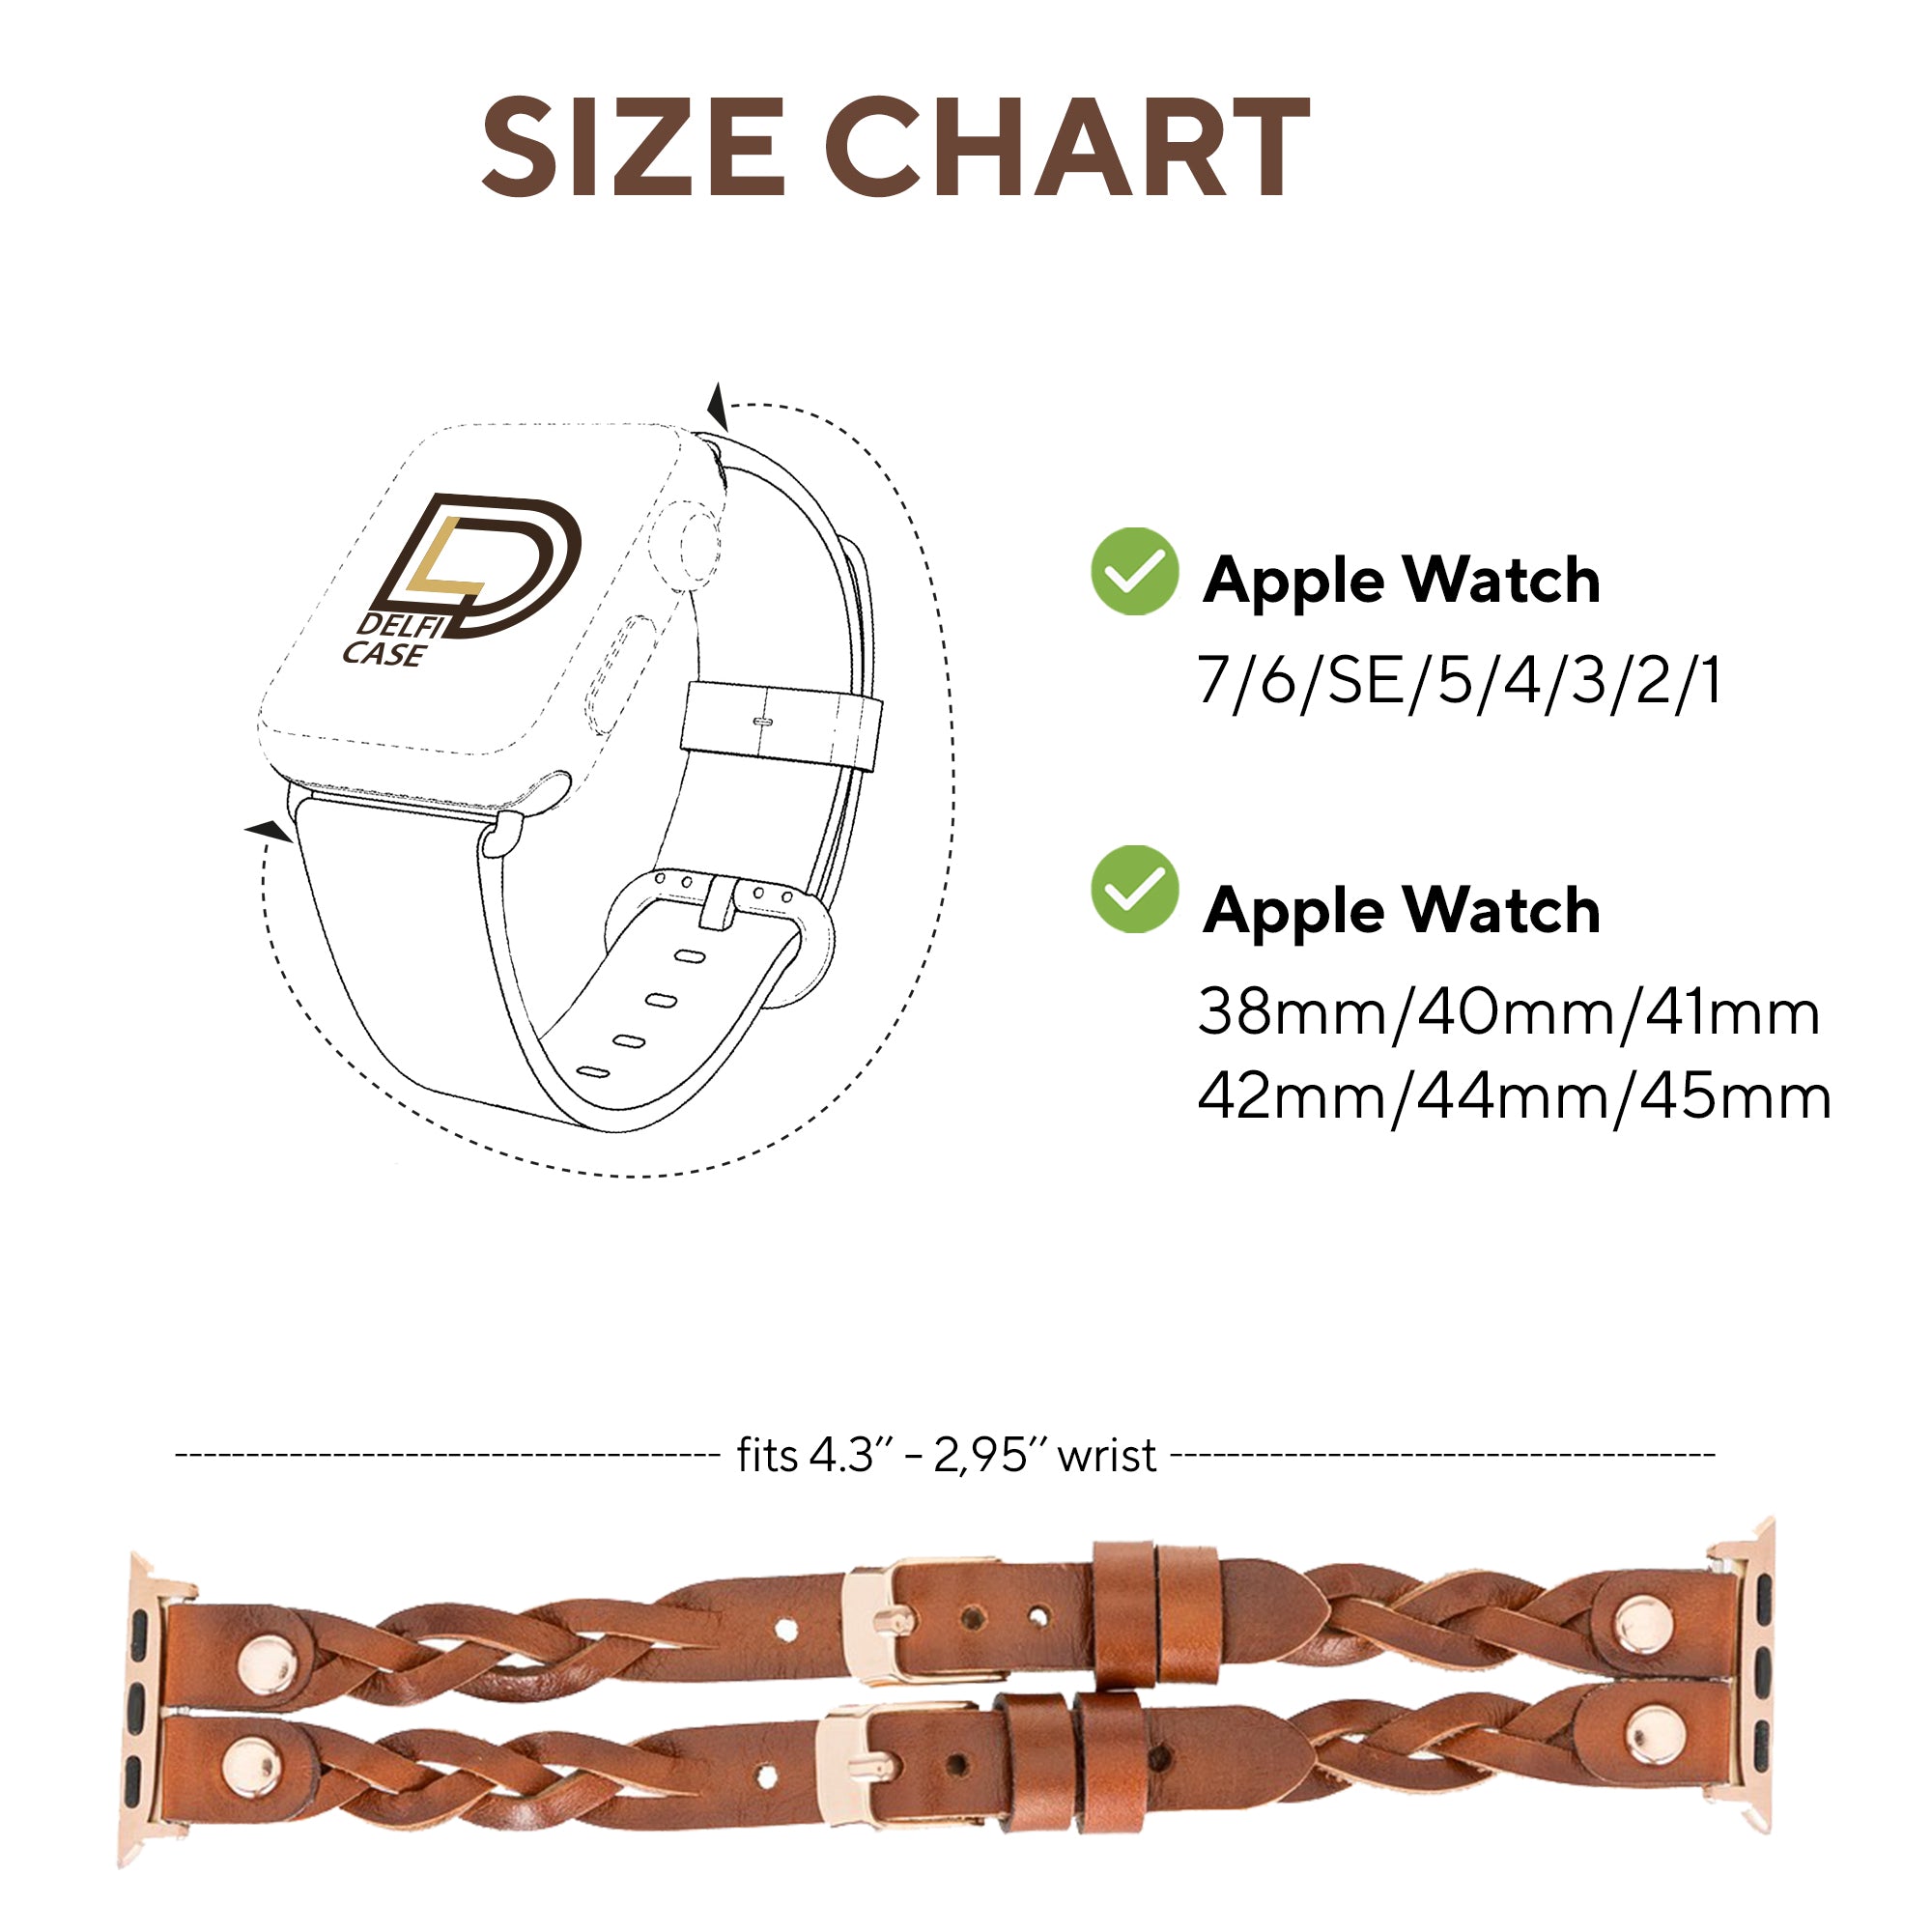 DelfiCase Sheffield-York Double Apple Watch Band for Apple Watch & Fitbit/Sense 35